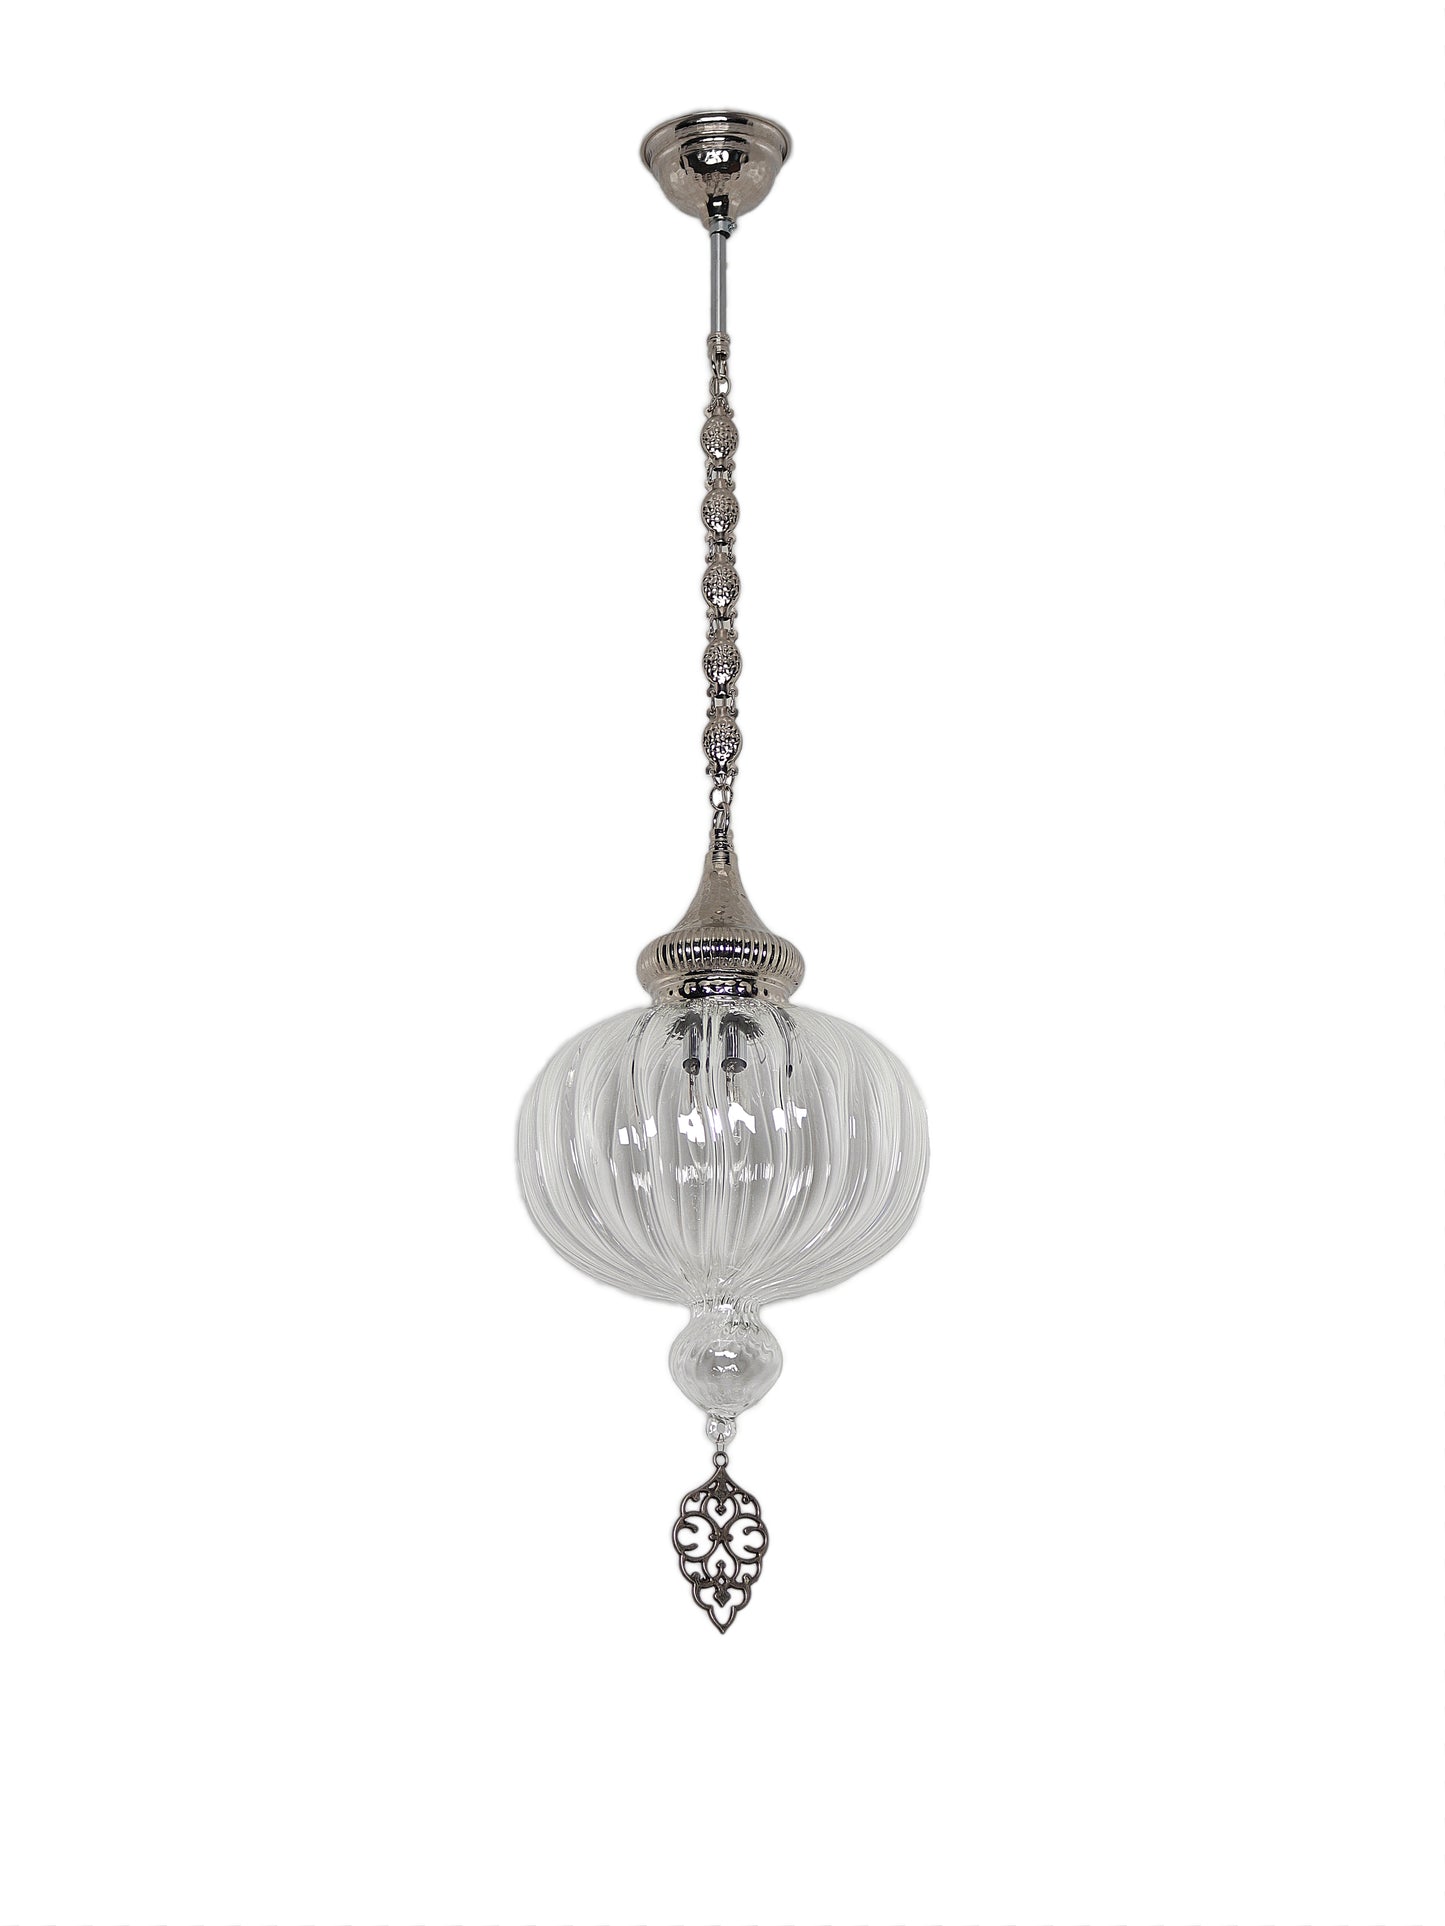 Pyrex Glass Pendant Lamp Turkish Ceiling Light